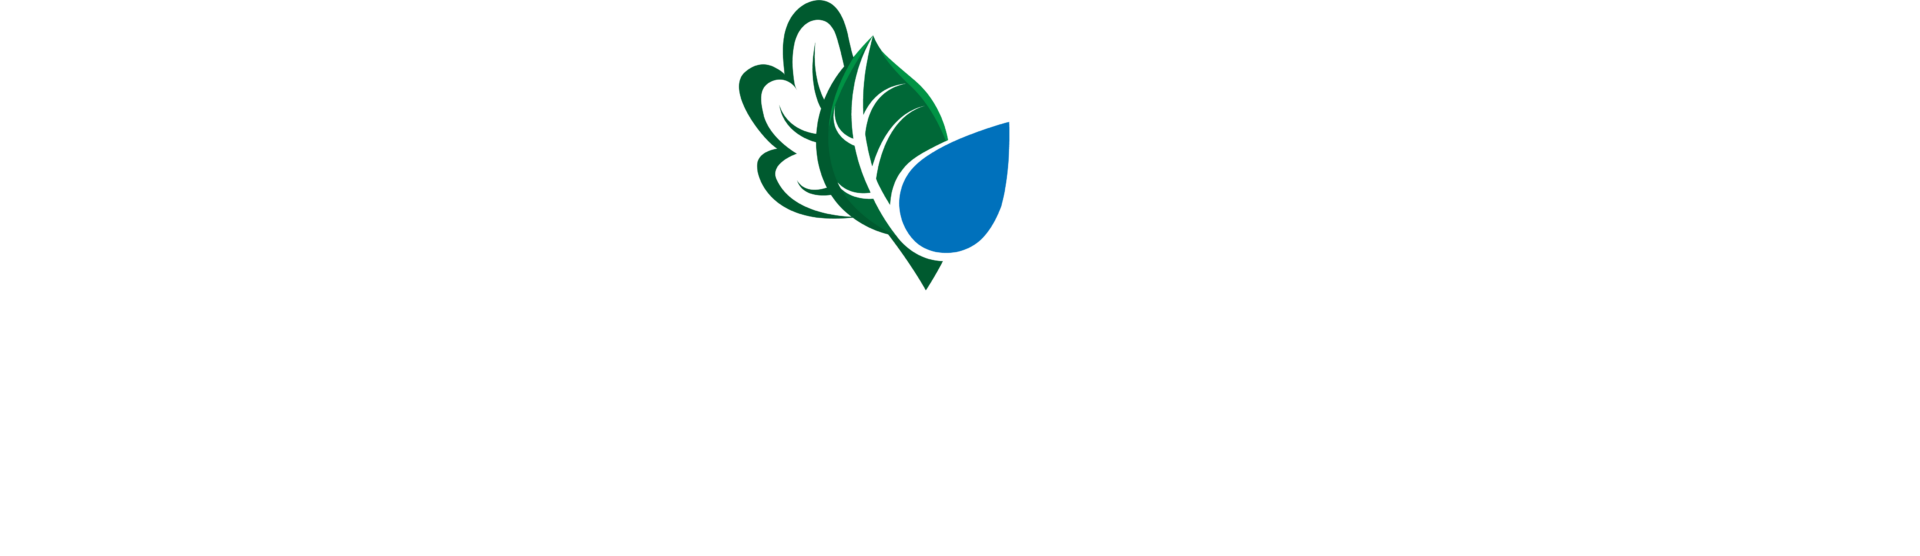 Top Tier Custom Landscape